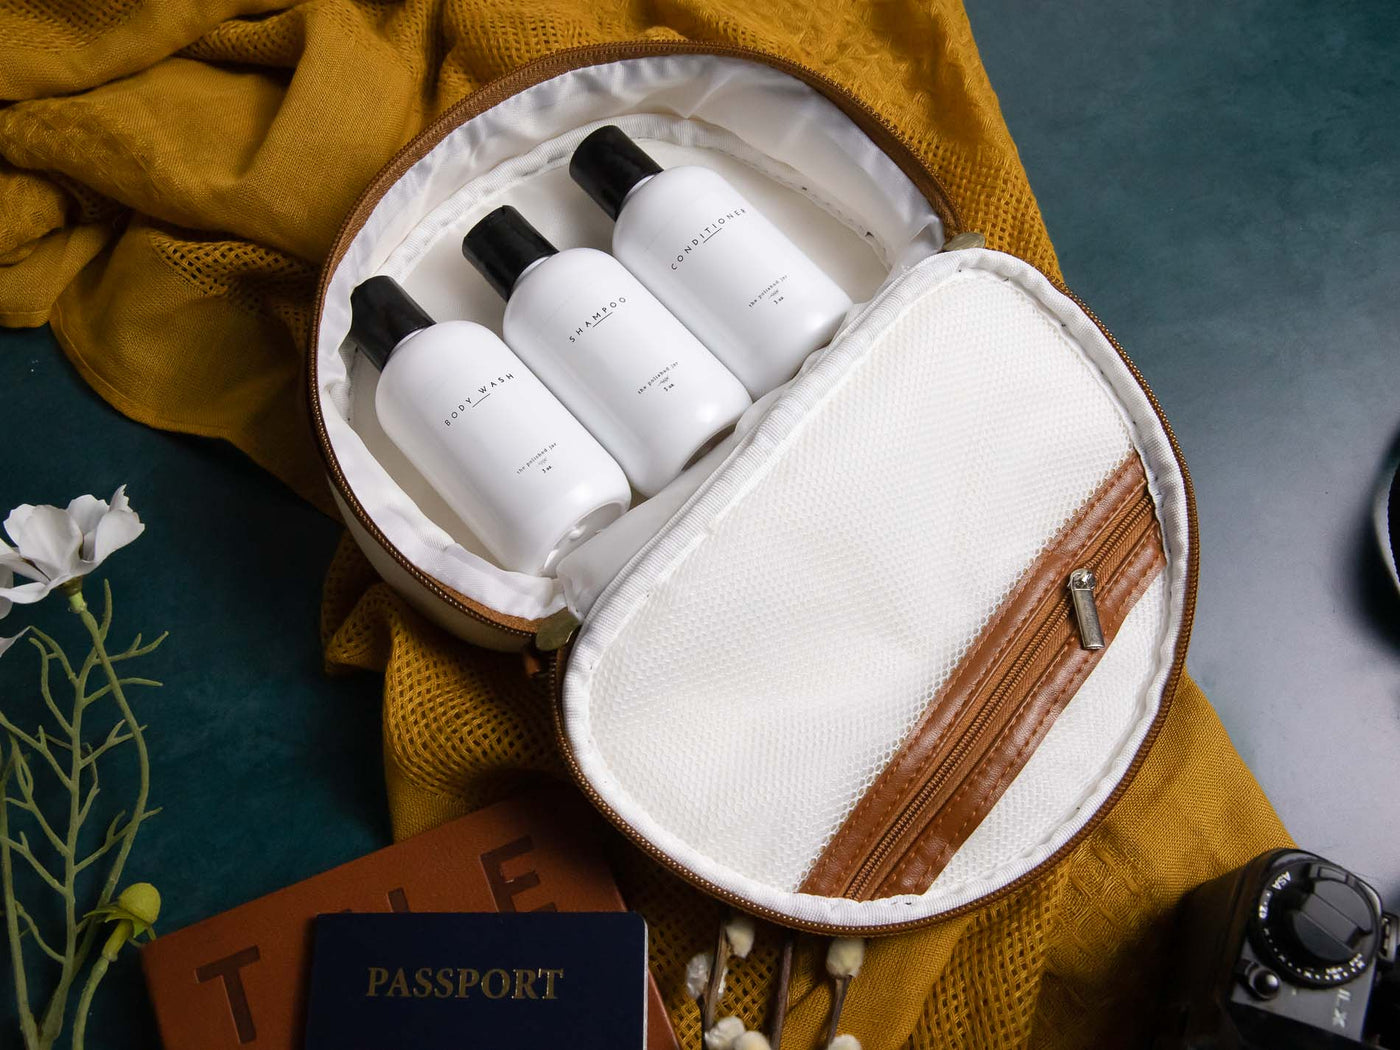 Travel Size Soap Bottle Set with Bag